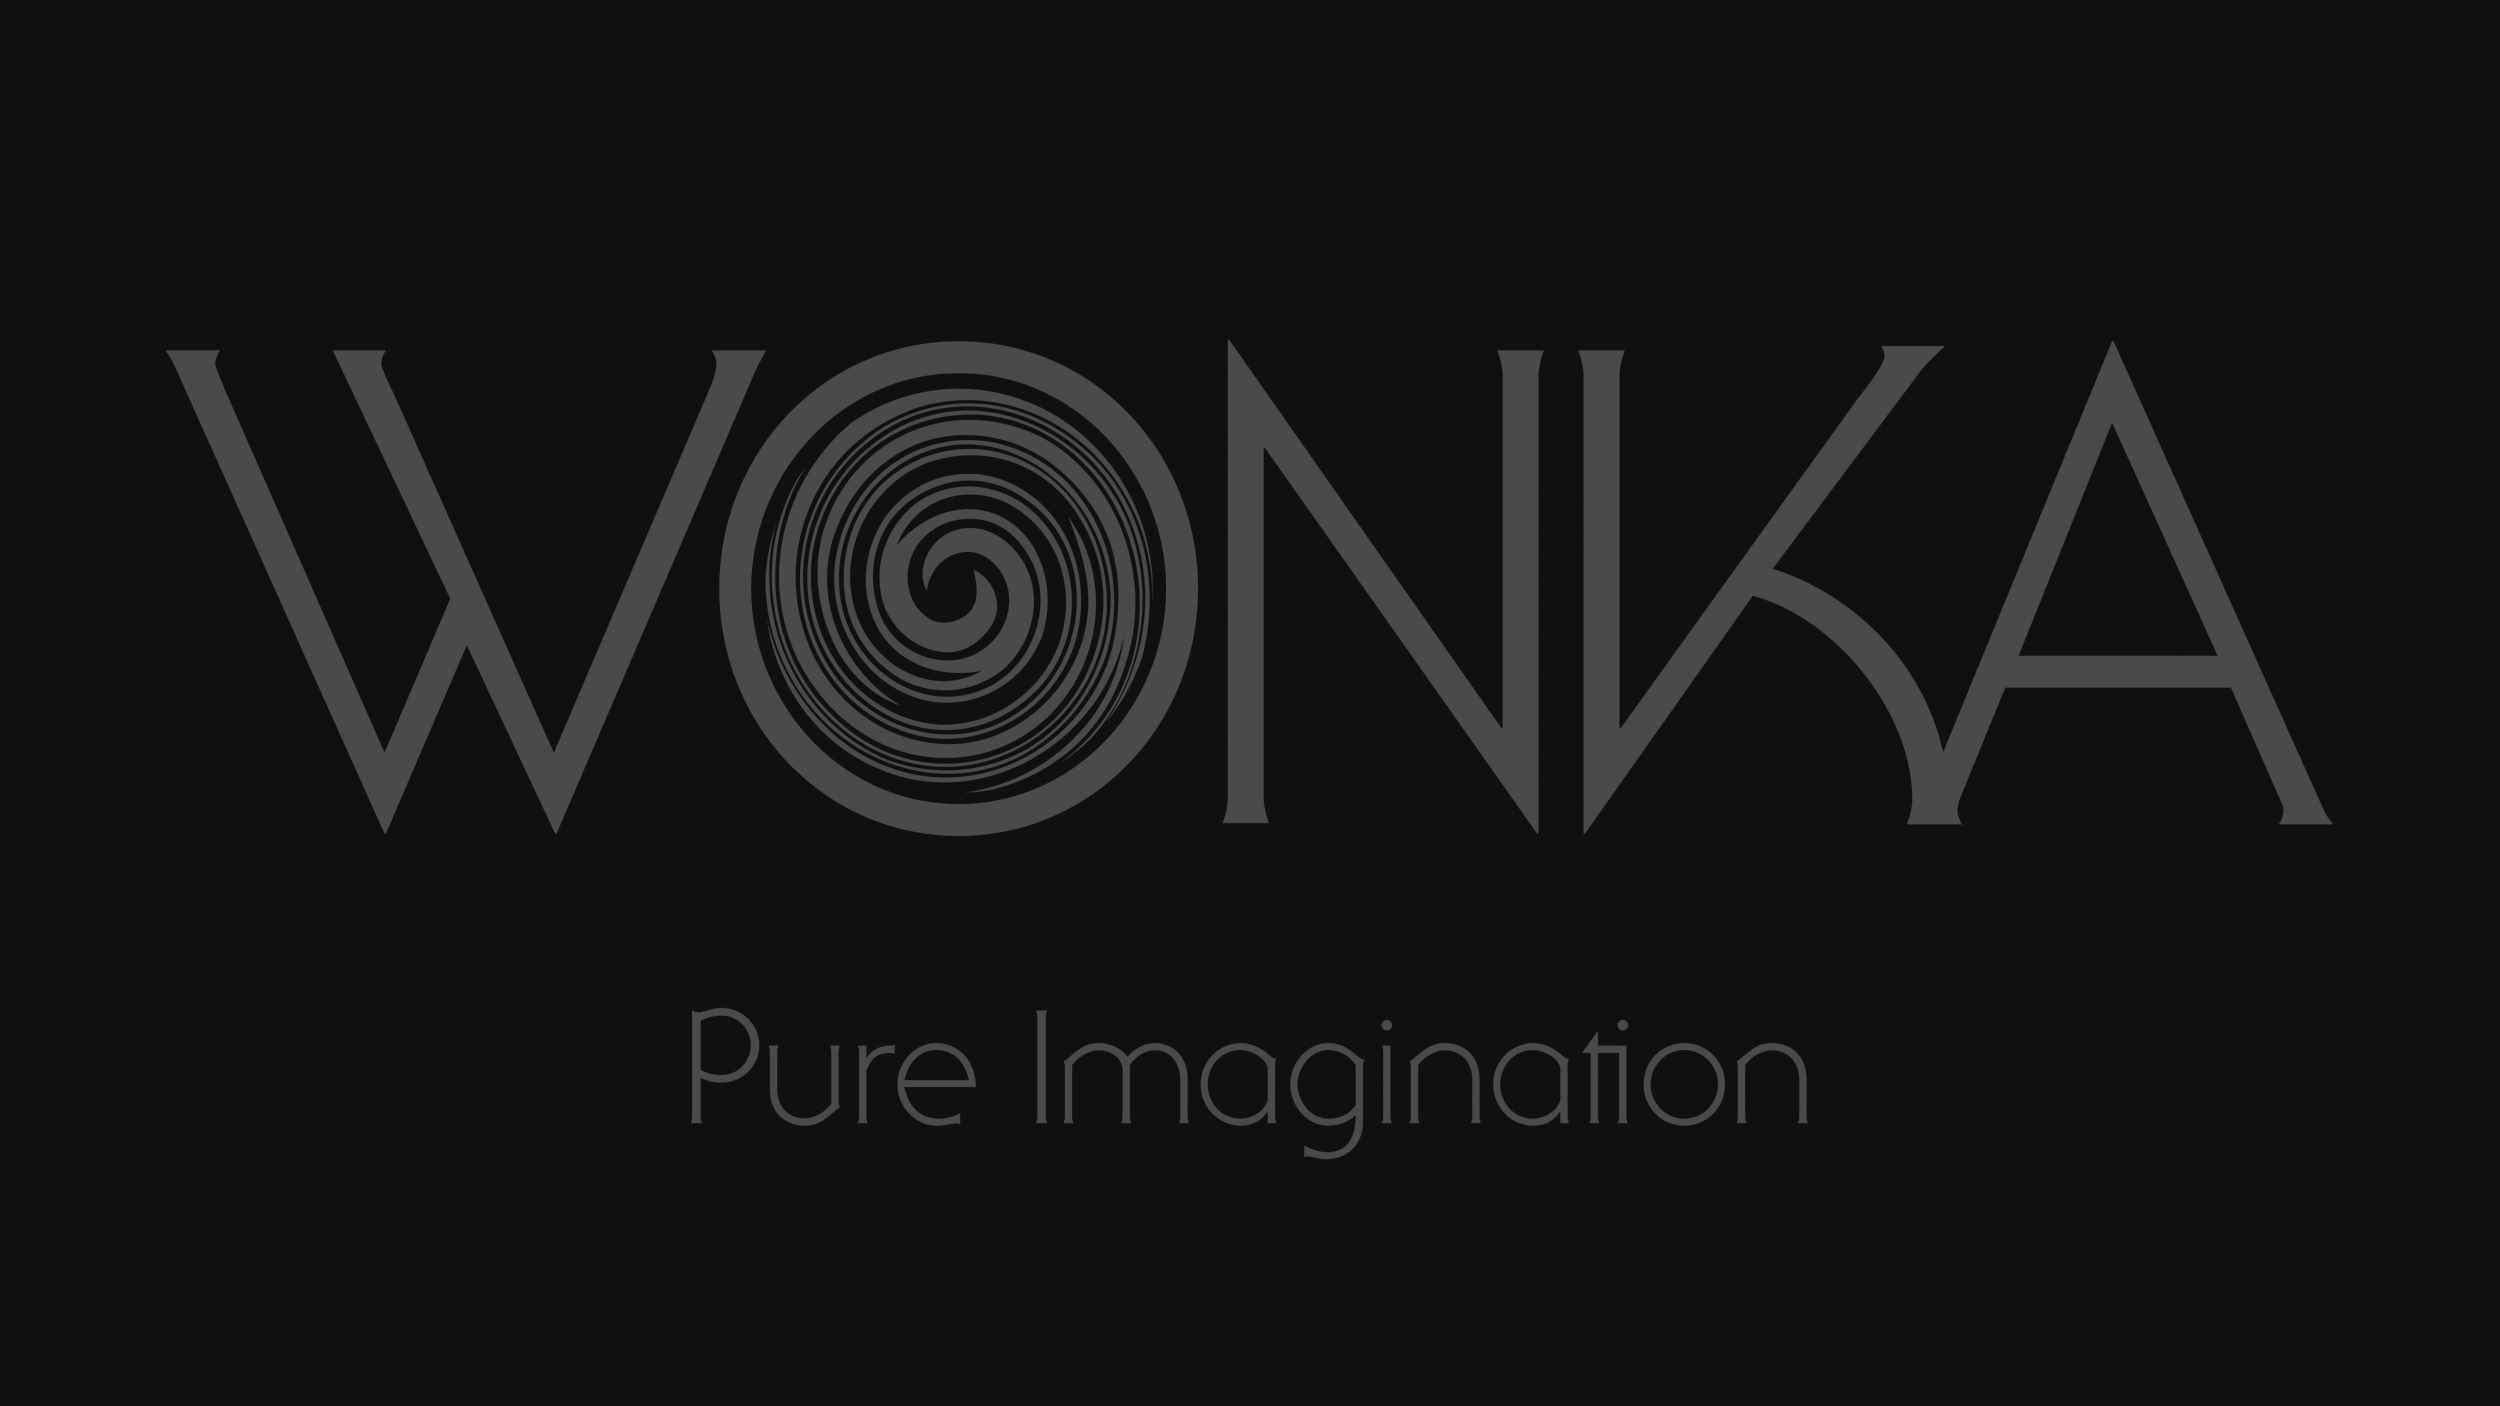 wonka_logo_med_gray.png